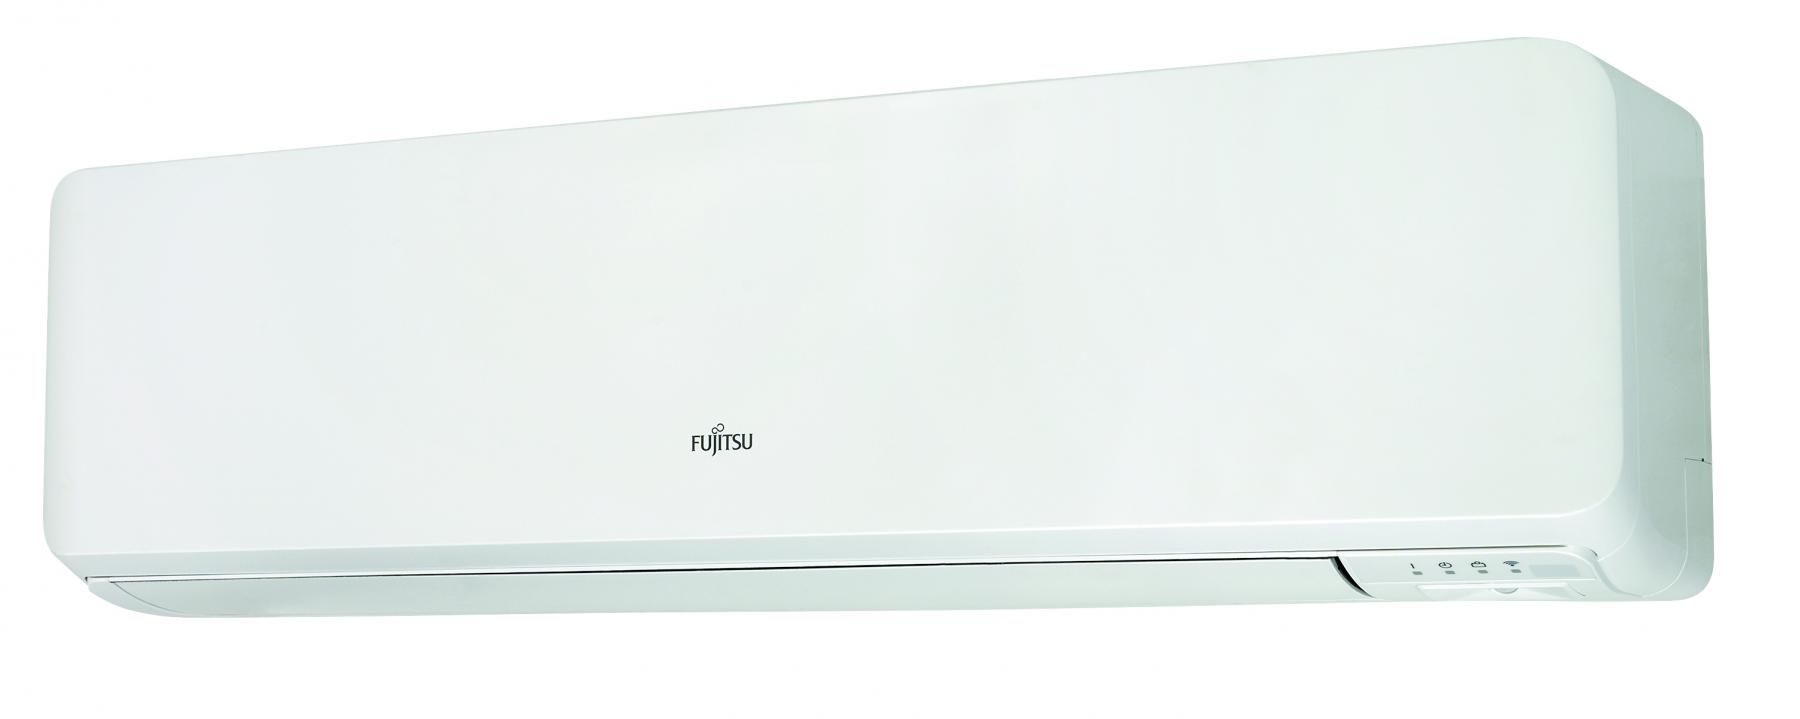 Buy Fujitsu 6 0kw Lifestyle Range Kmtc Reverse Cycle Split System Air Conditioner Harvey Norman Au